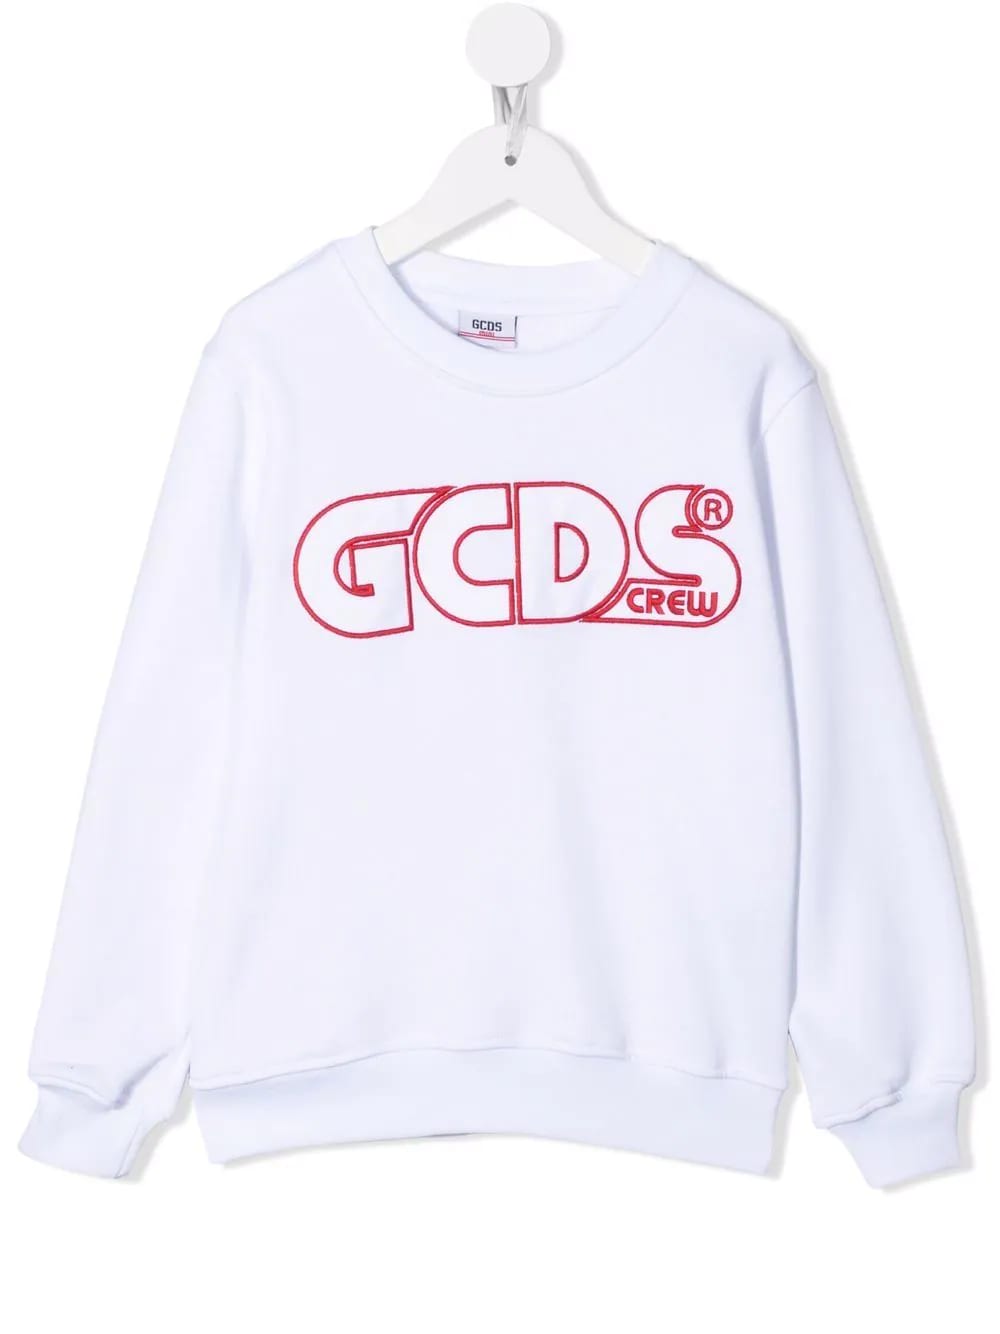 GCDS Mini Kids White Sweatshirt With Red Profiled Logo